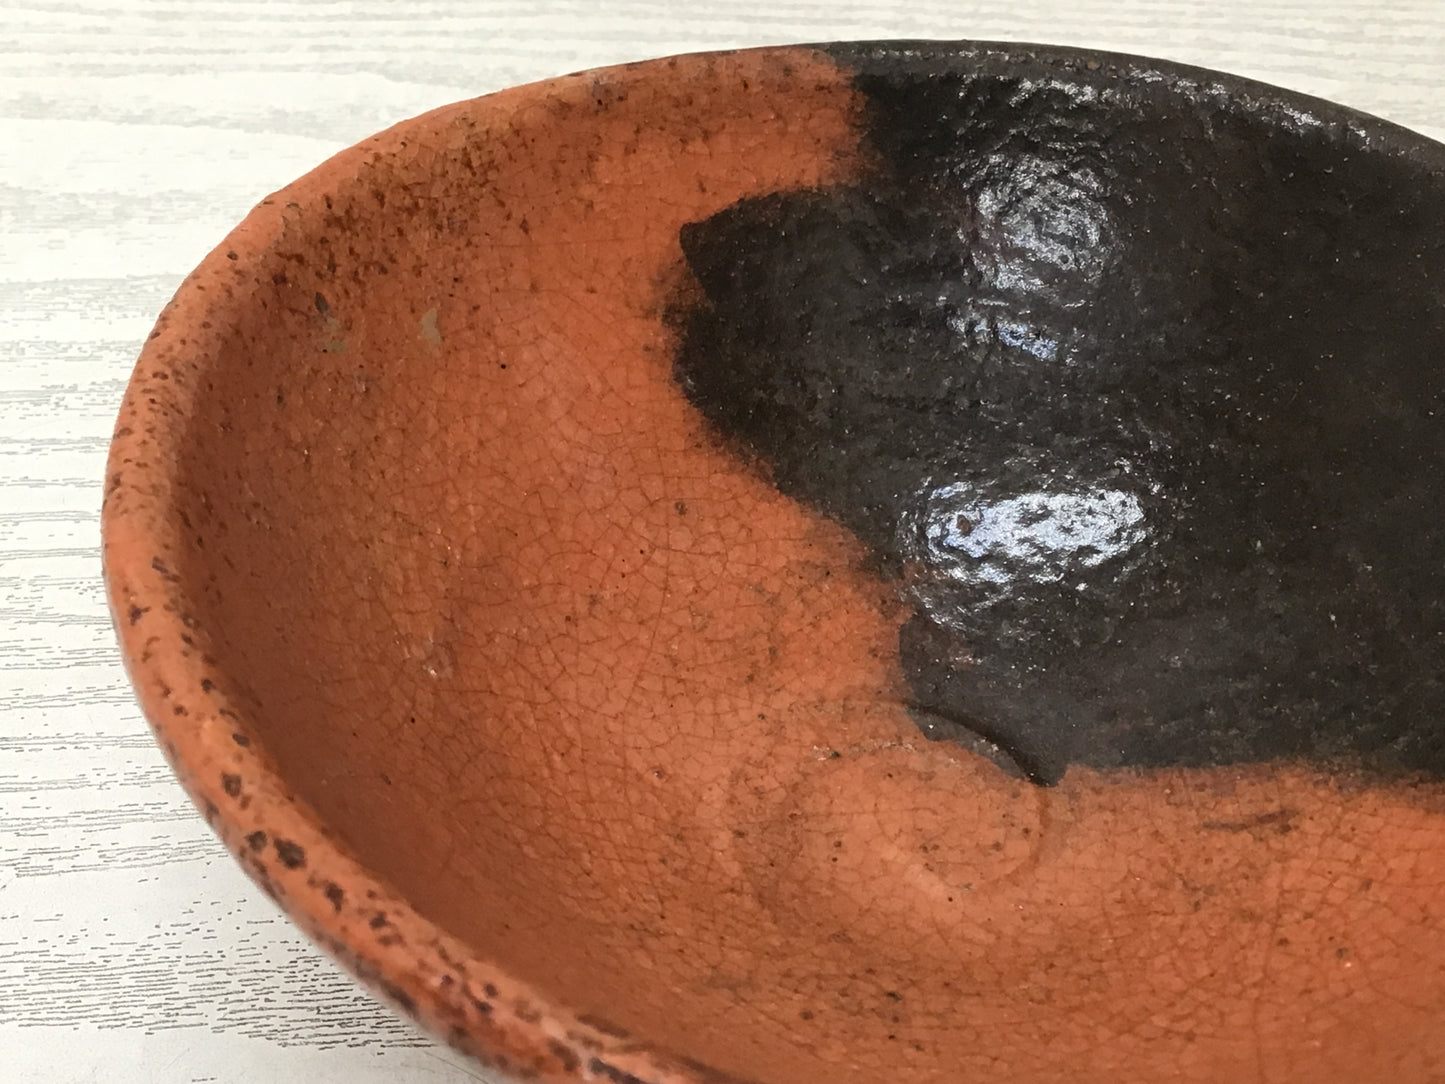 Y2615 CHAWAN Raku-ware Red Flat box Japan tea ceremony bowl antique vintage